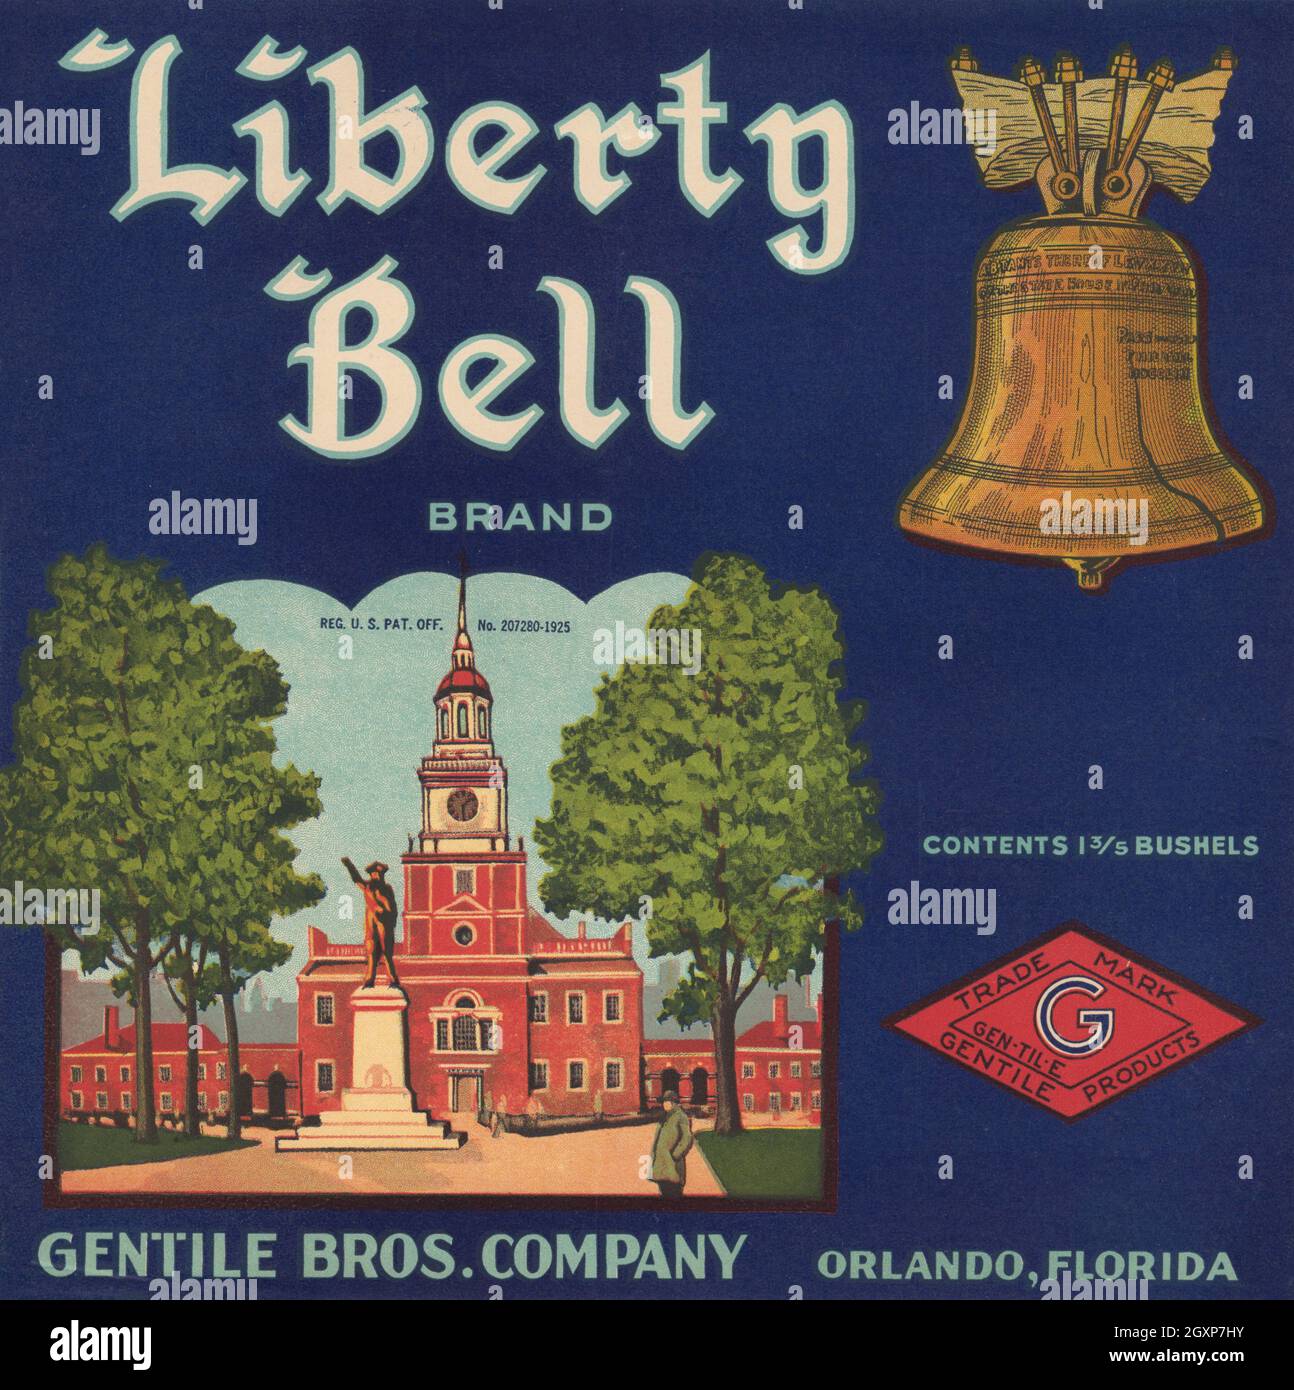 Liberty Bell Brand Stock Photo